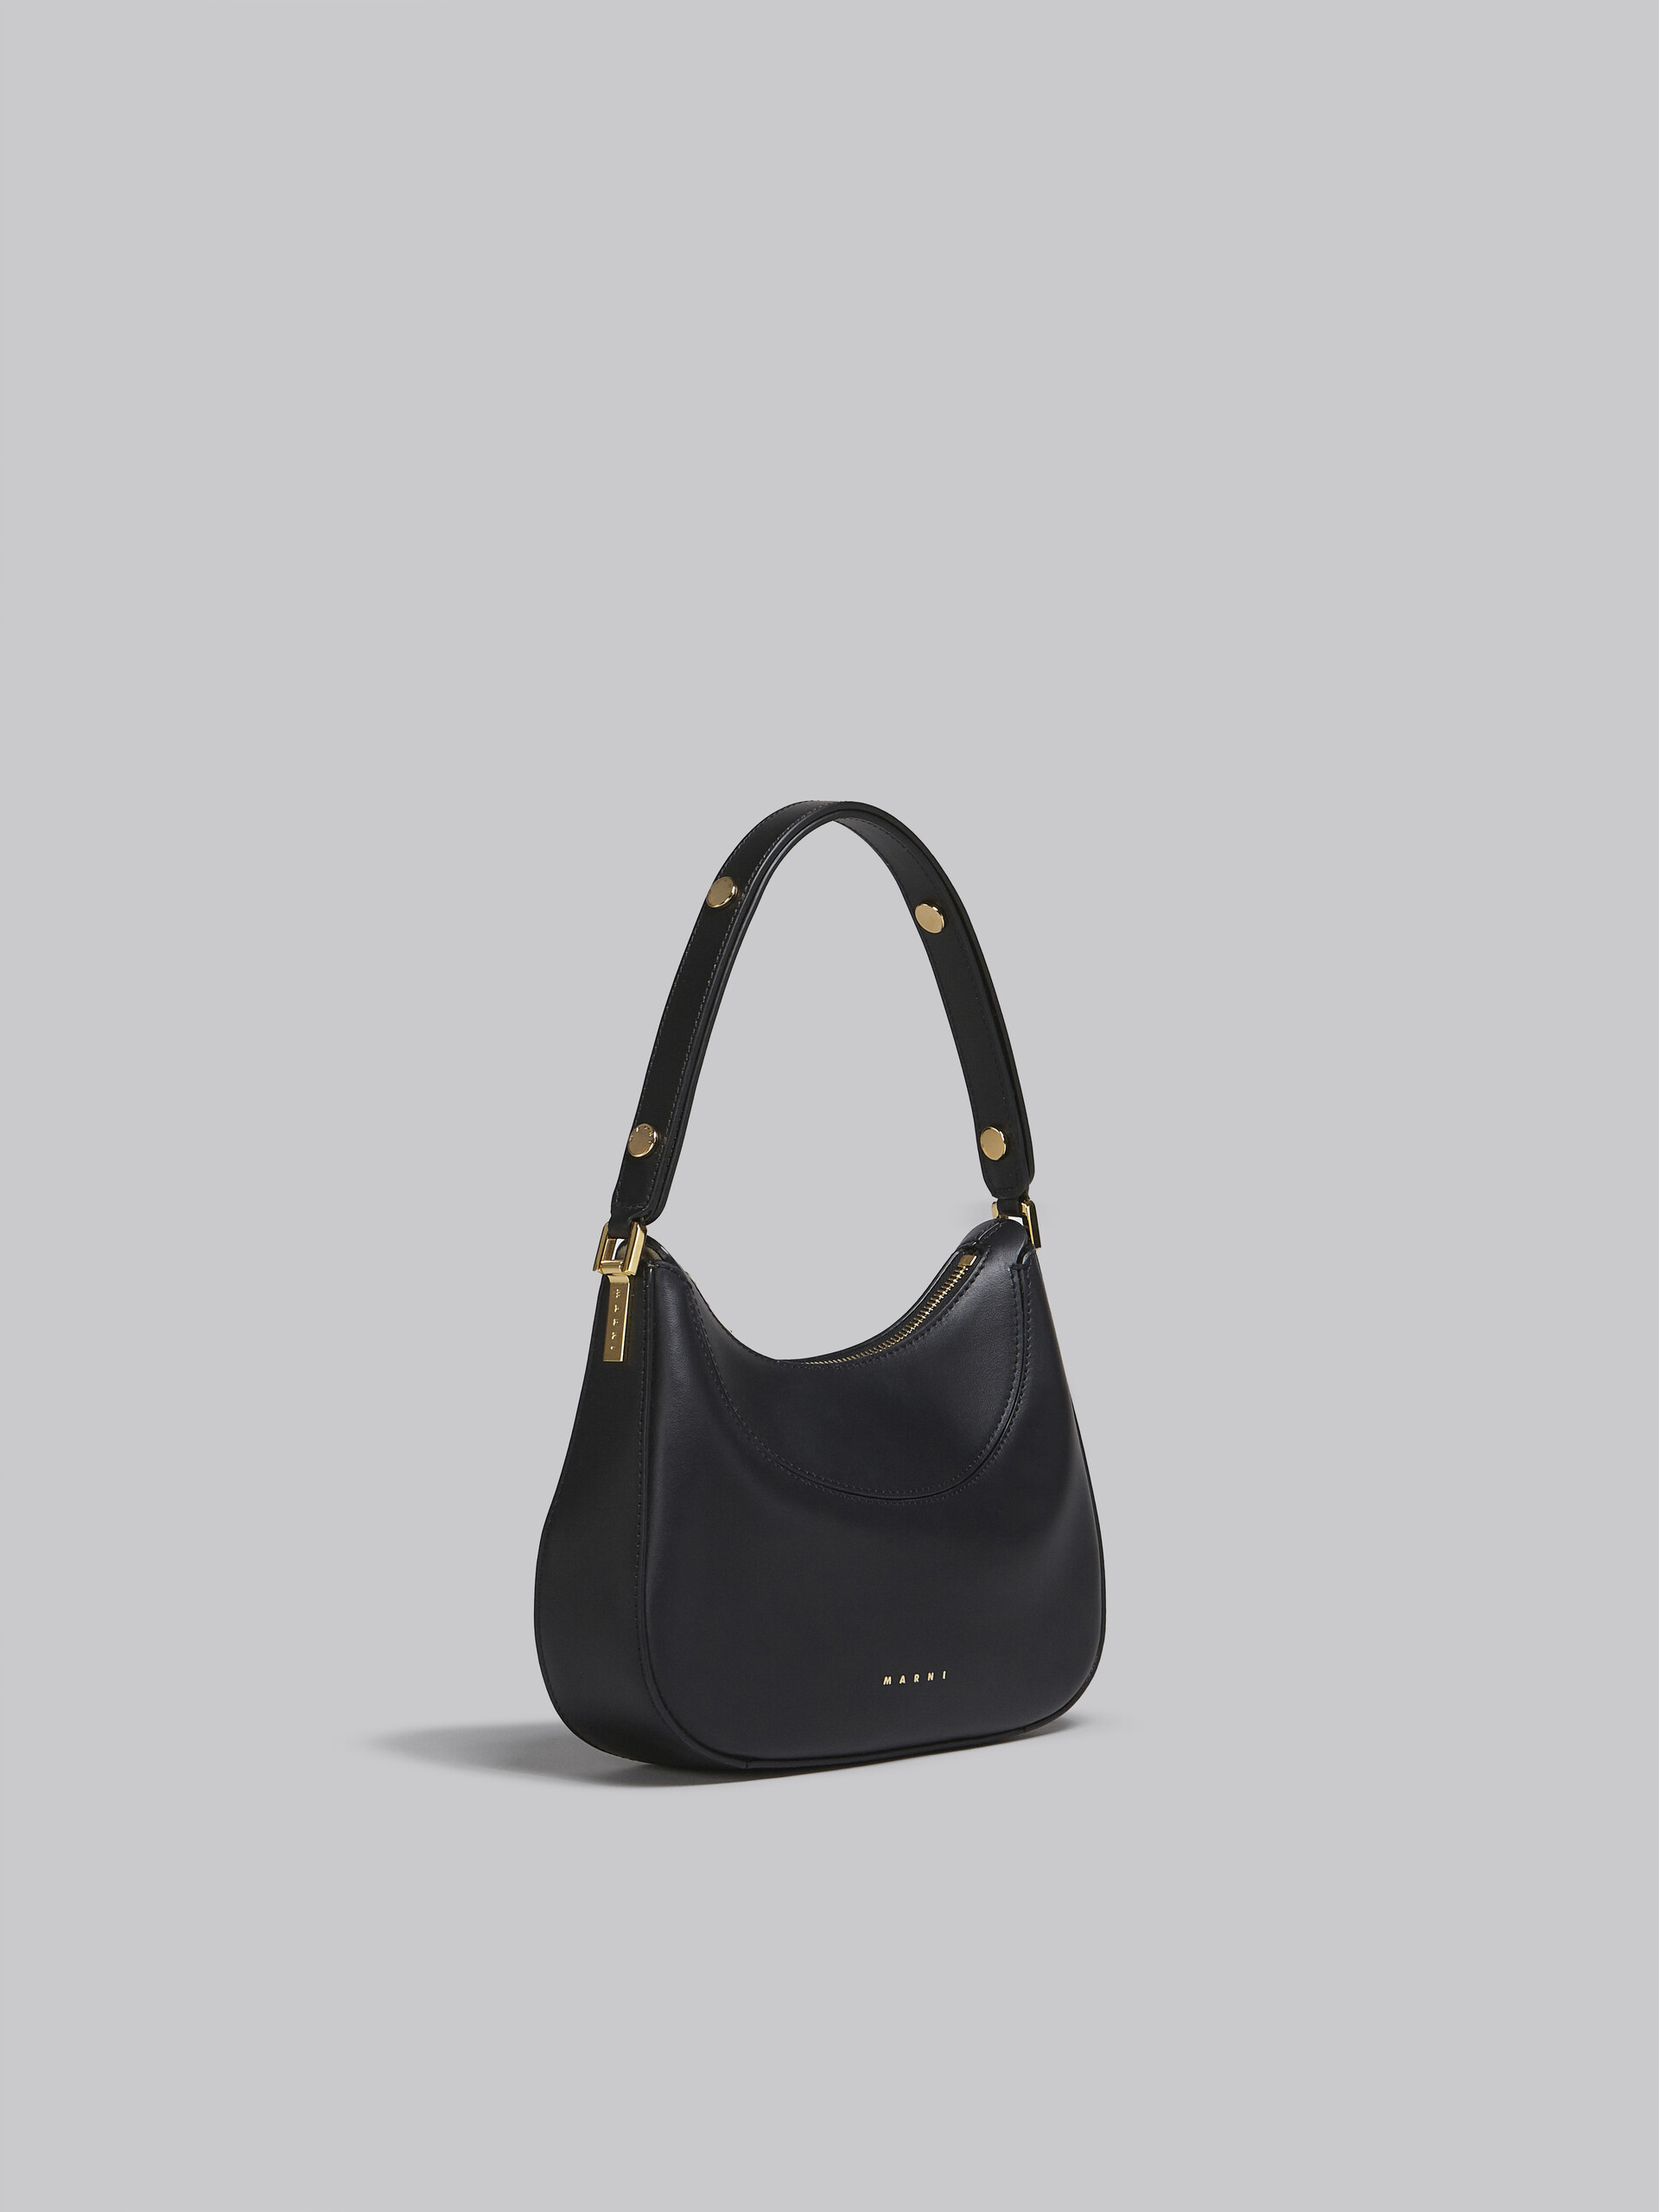 Milano mini bag in black leather - Handbags - Image 6